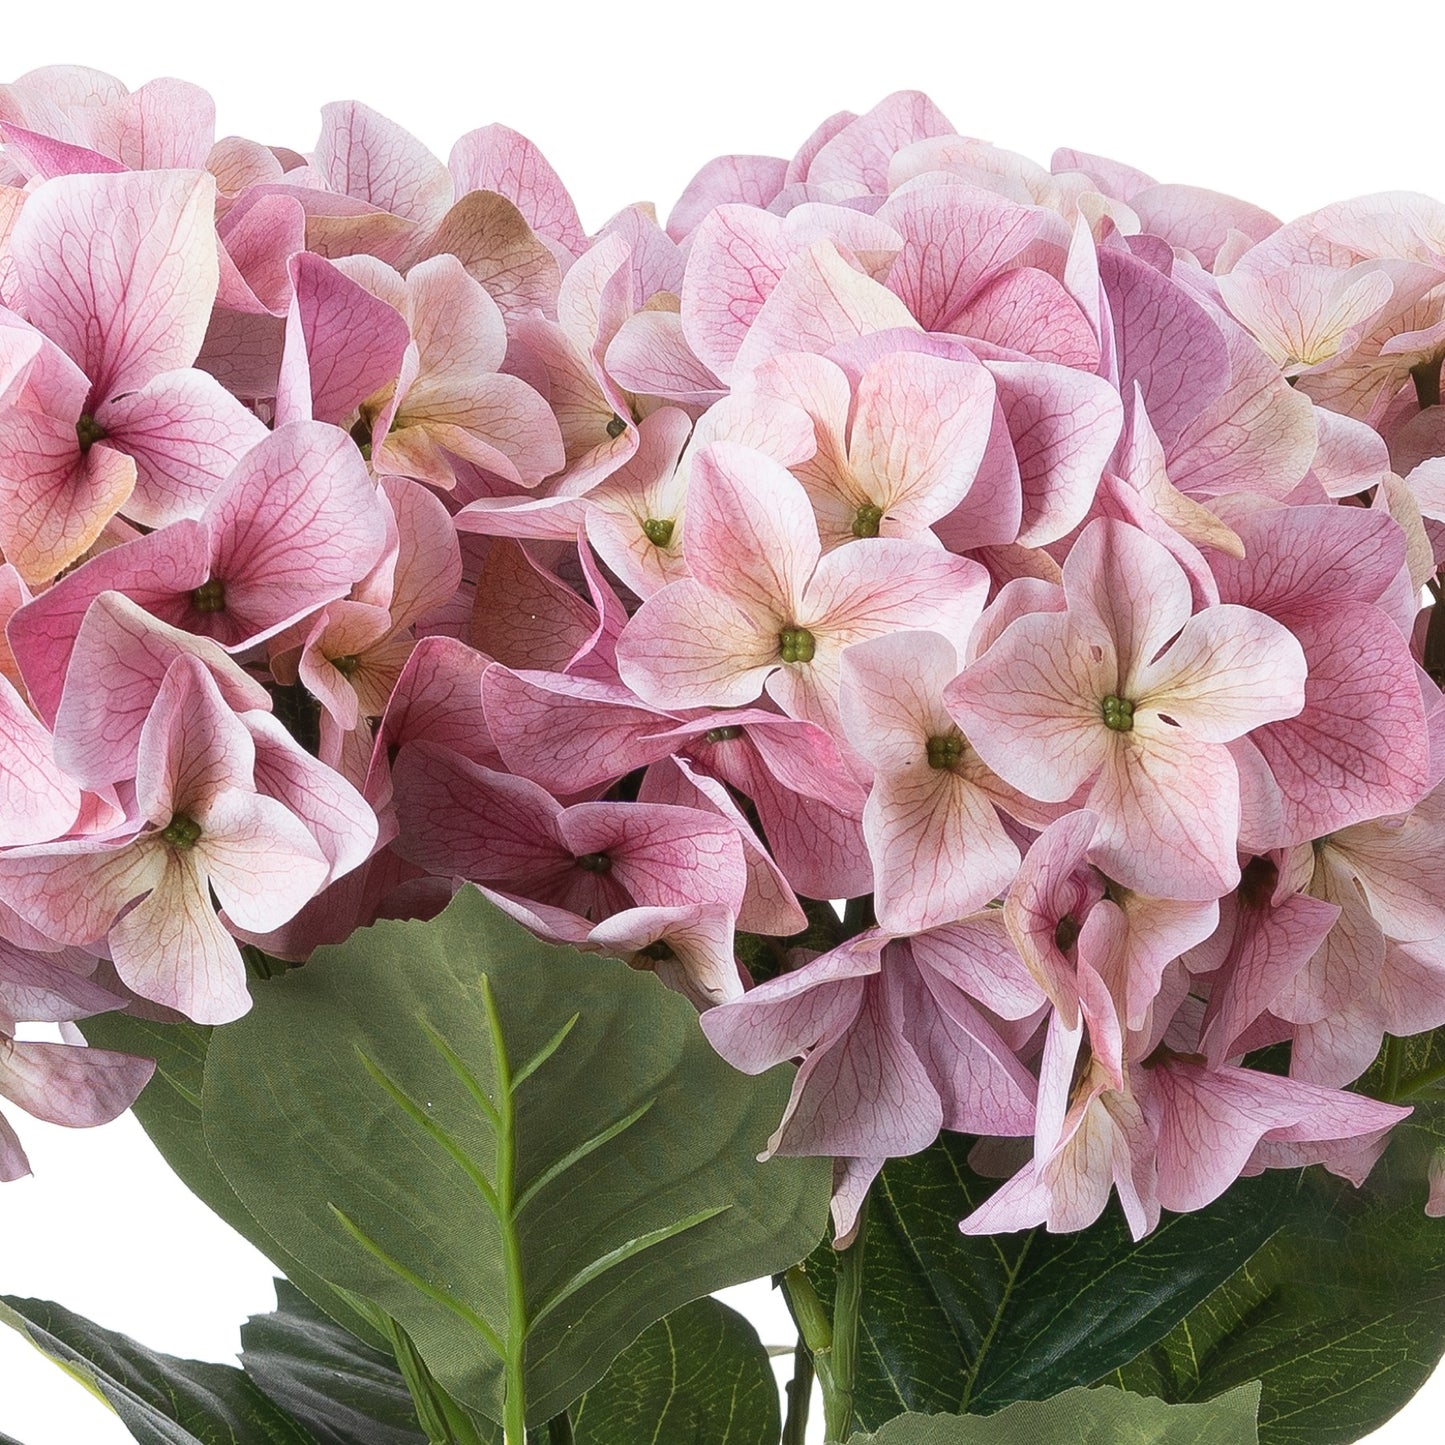 Shabby Pink Hydrangea Bouquet - The Tulip Tree Chiddingstone